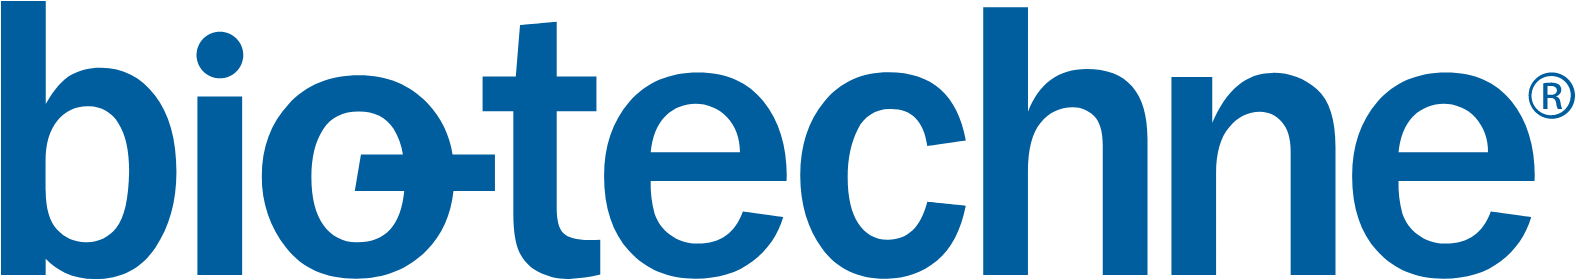 Bio-Techne logo large (transparent PNG)